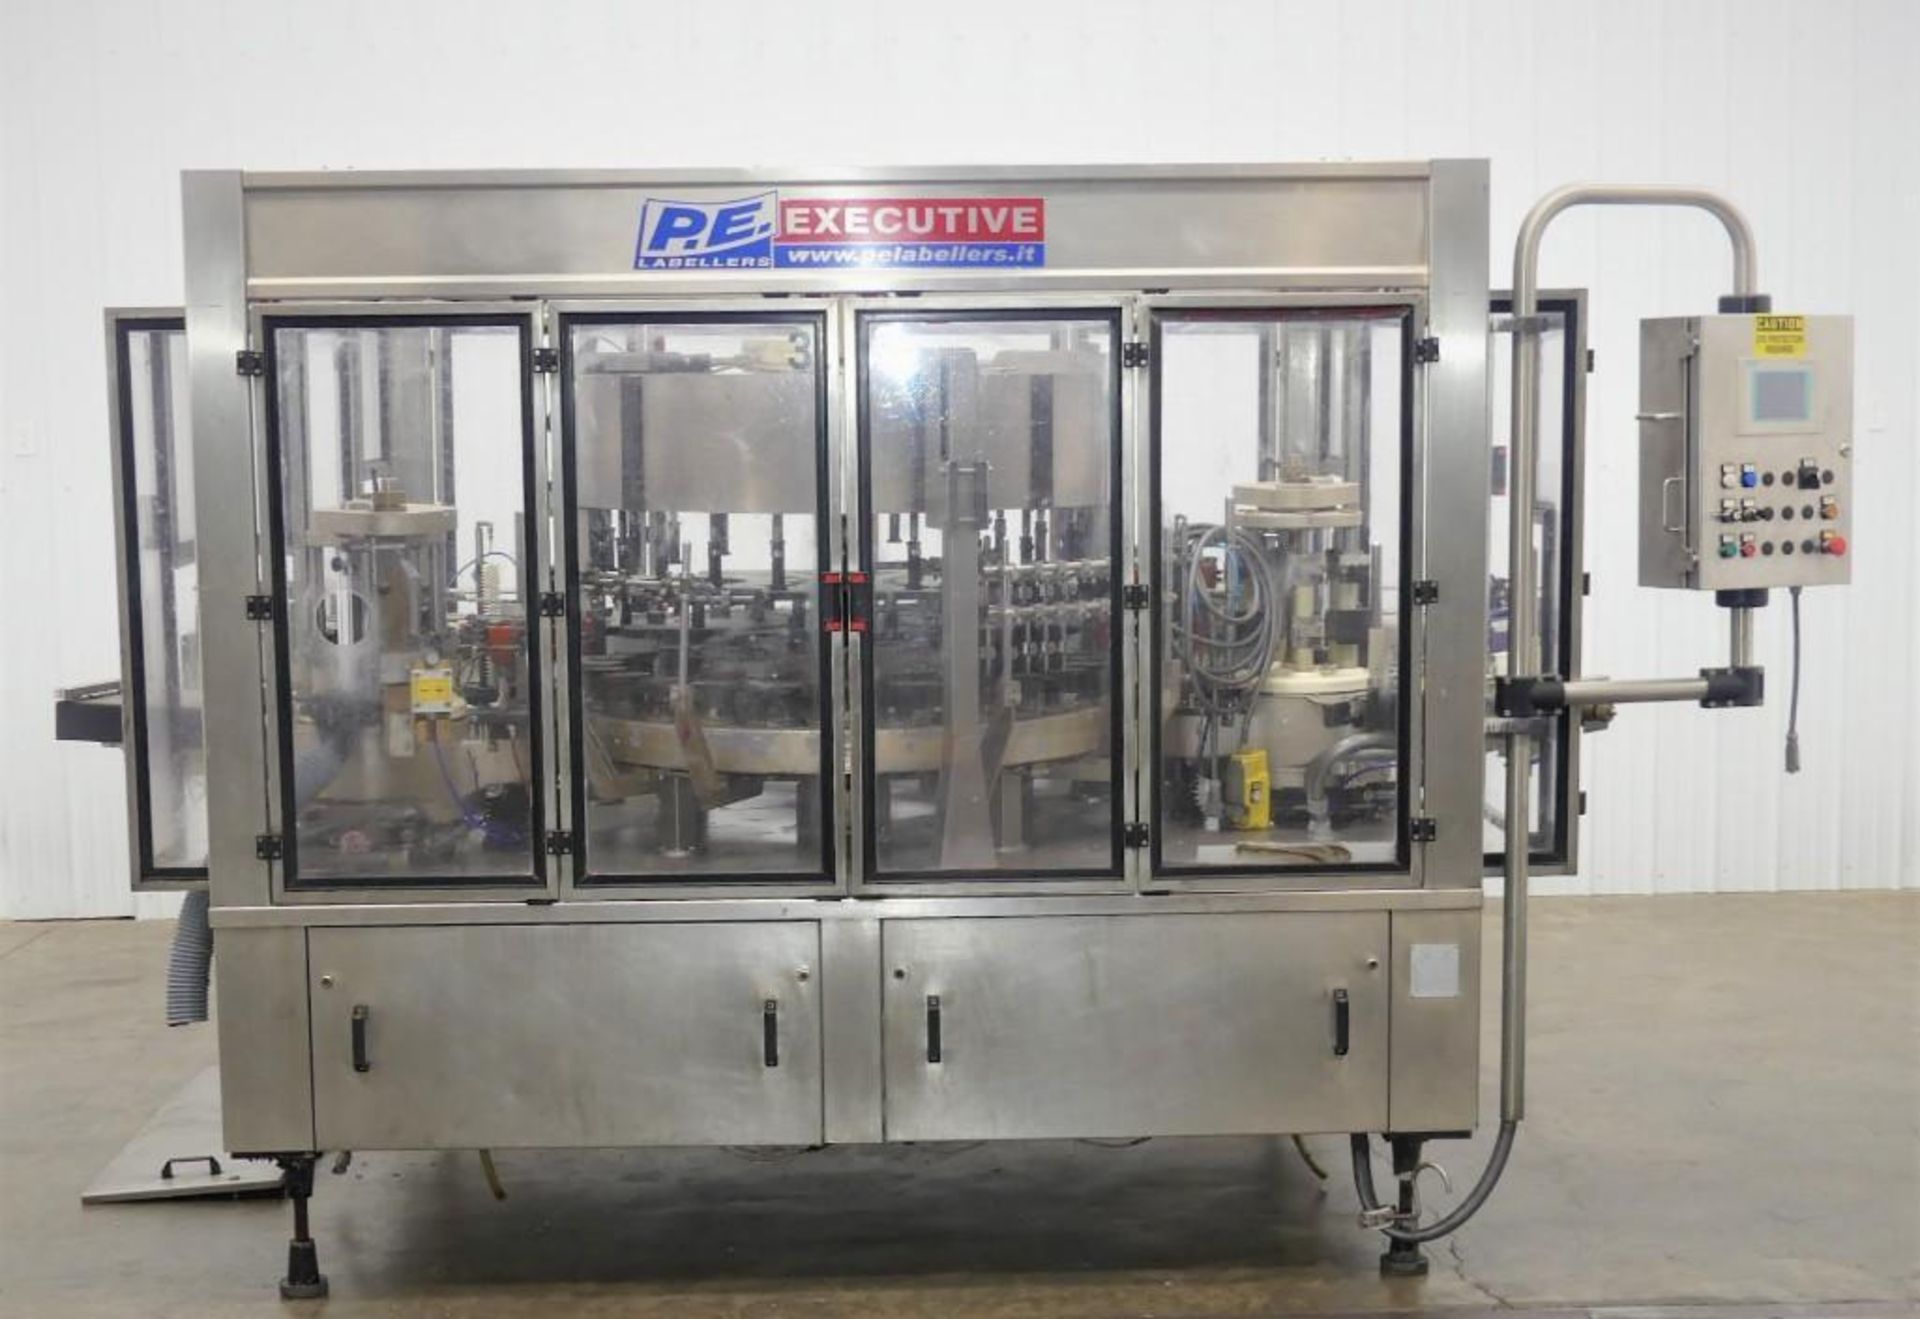 PE Labellers Executive KC 570 Automatic Labelling Machine